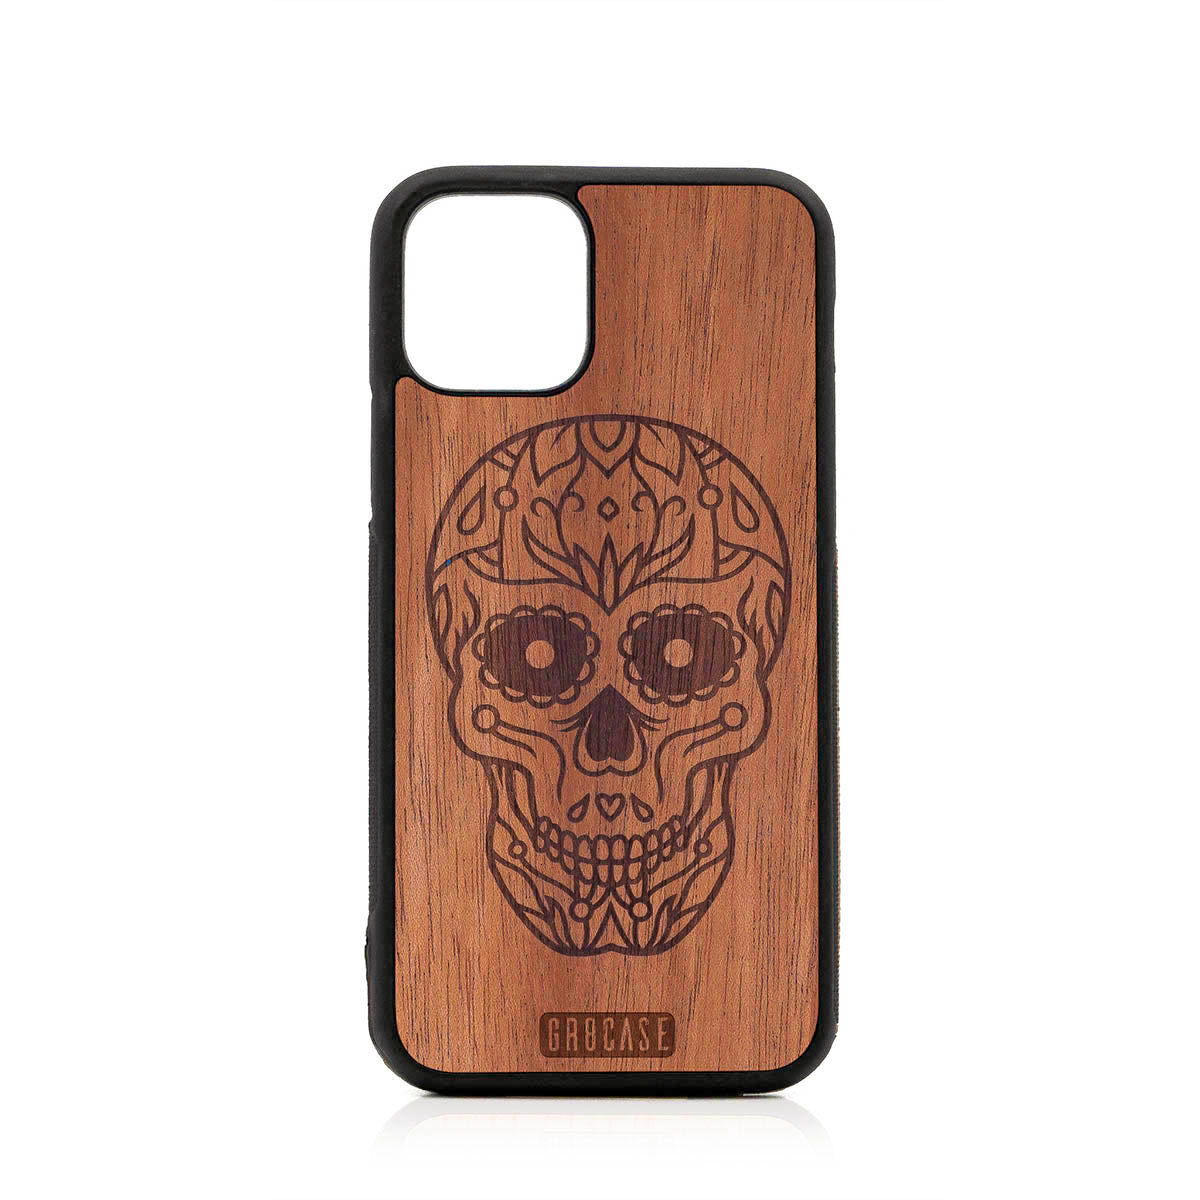 Sugar Skull Design Wood Case For iPhone 11 Pro by GR8CASE